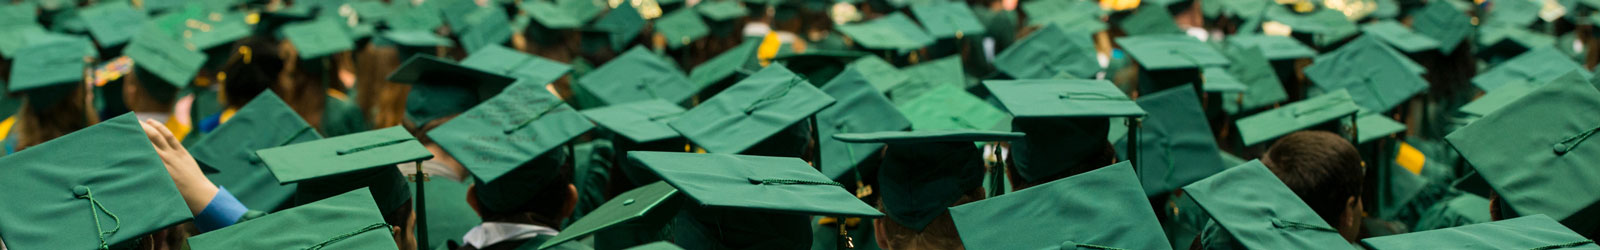 view of graduation caps of graduates in Mason's EagleBank Arena on Fairfax Campus